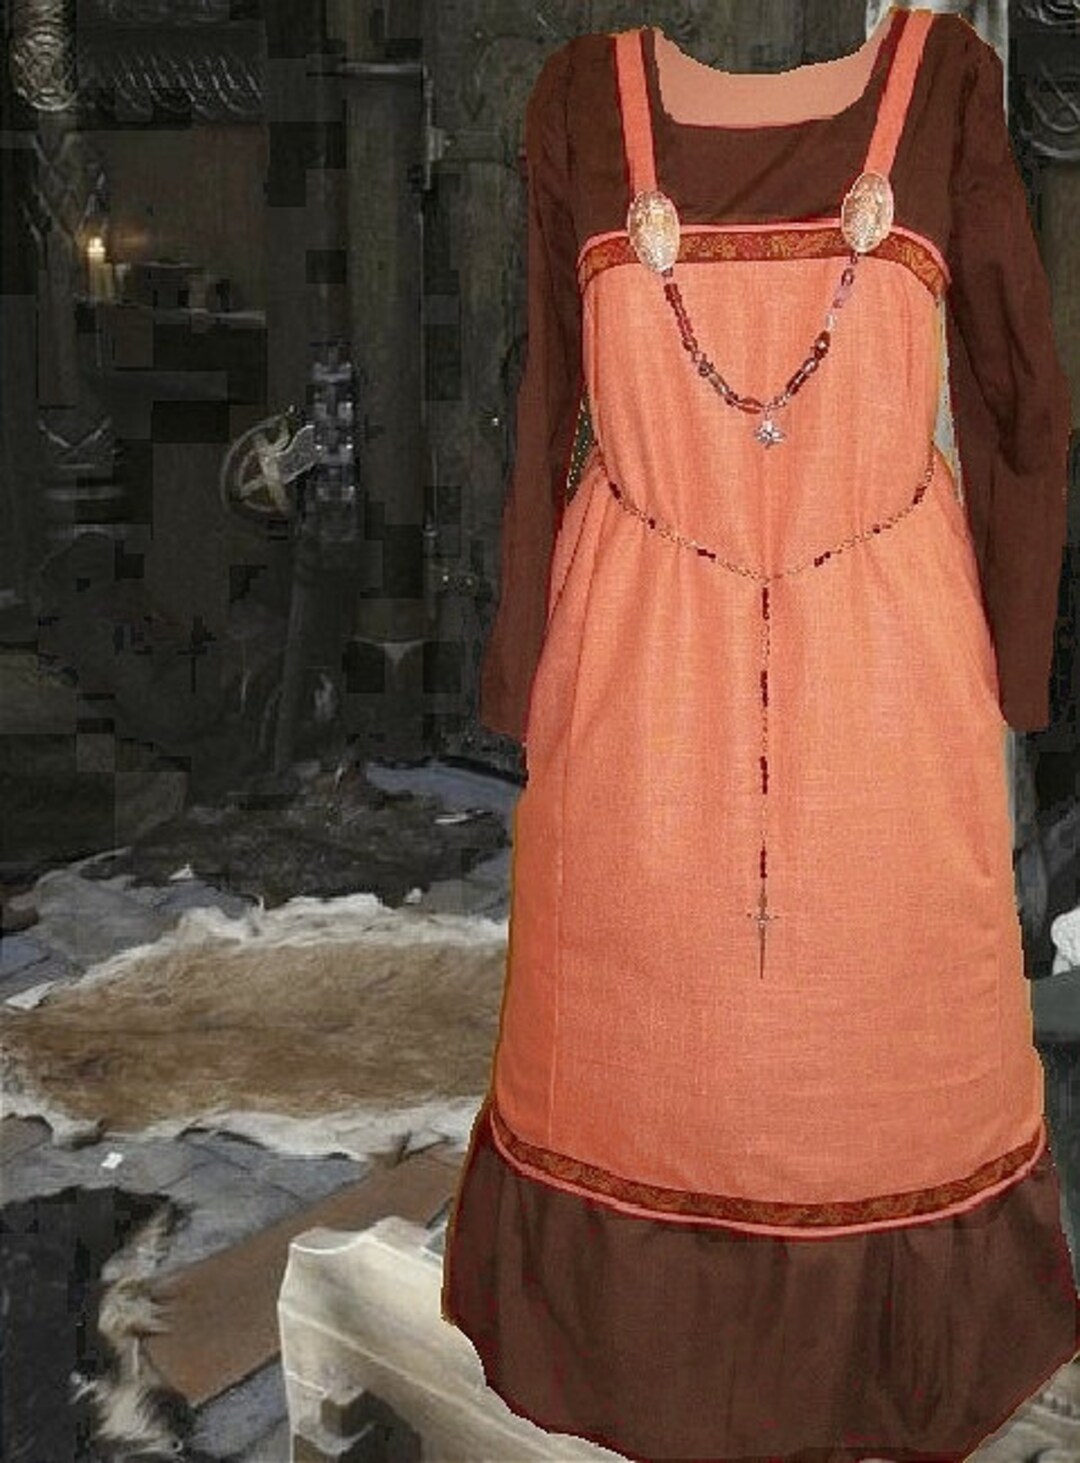 Disfraz Vikinga Mujer - Choco choco Disfraces